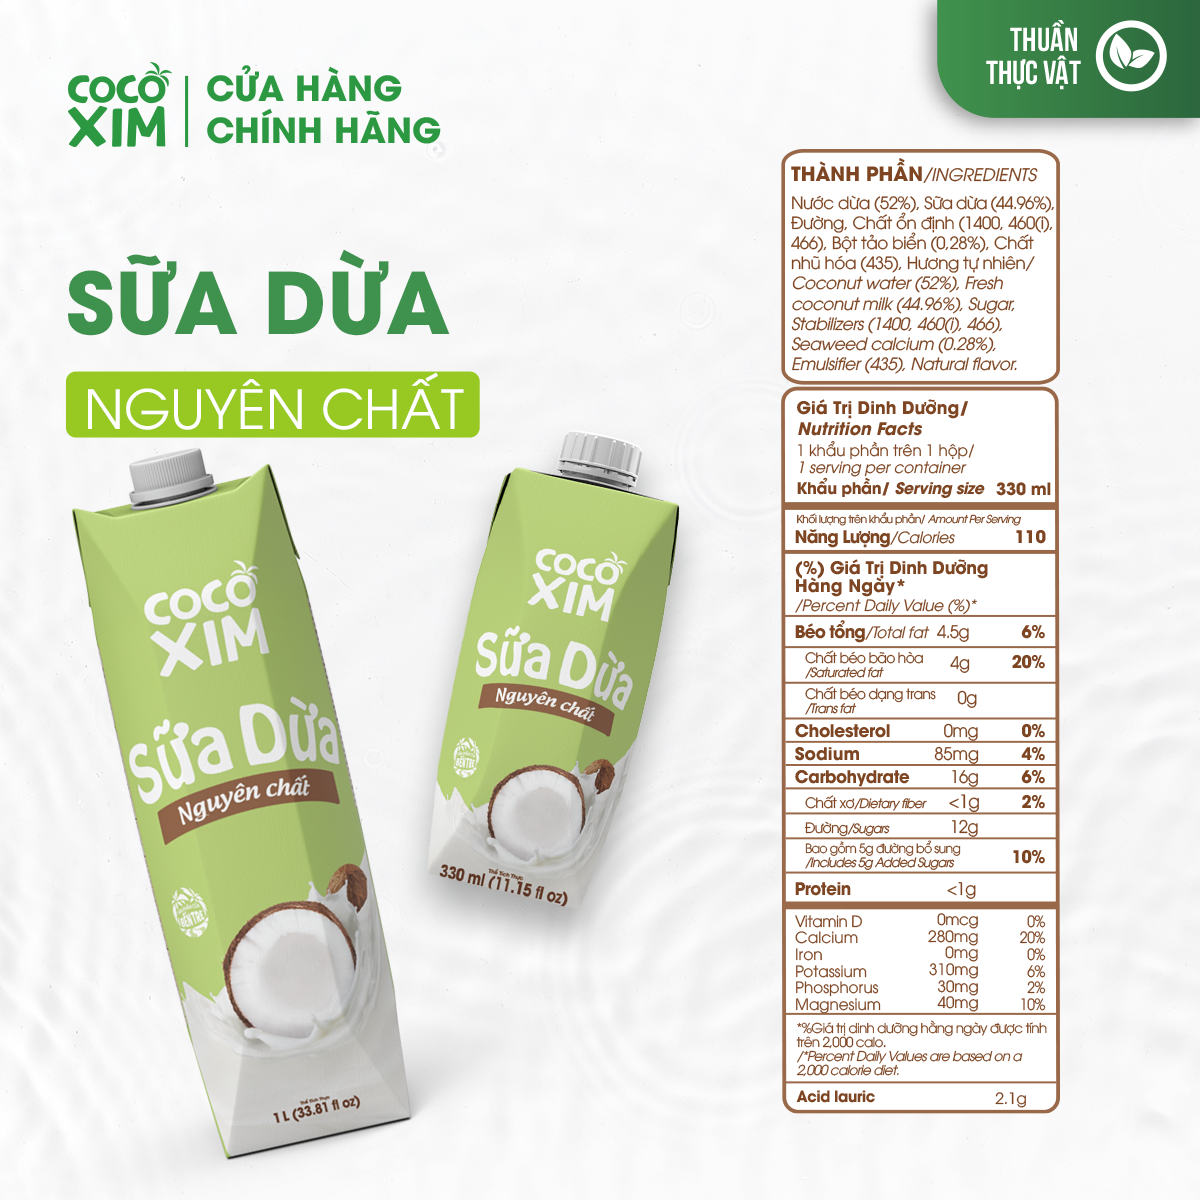 Sữa Dừa Cocoxim Nguyên Chất 330ml/ Hộp